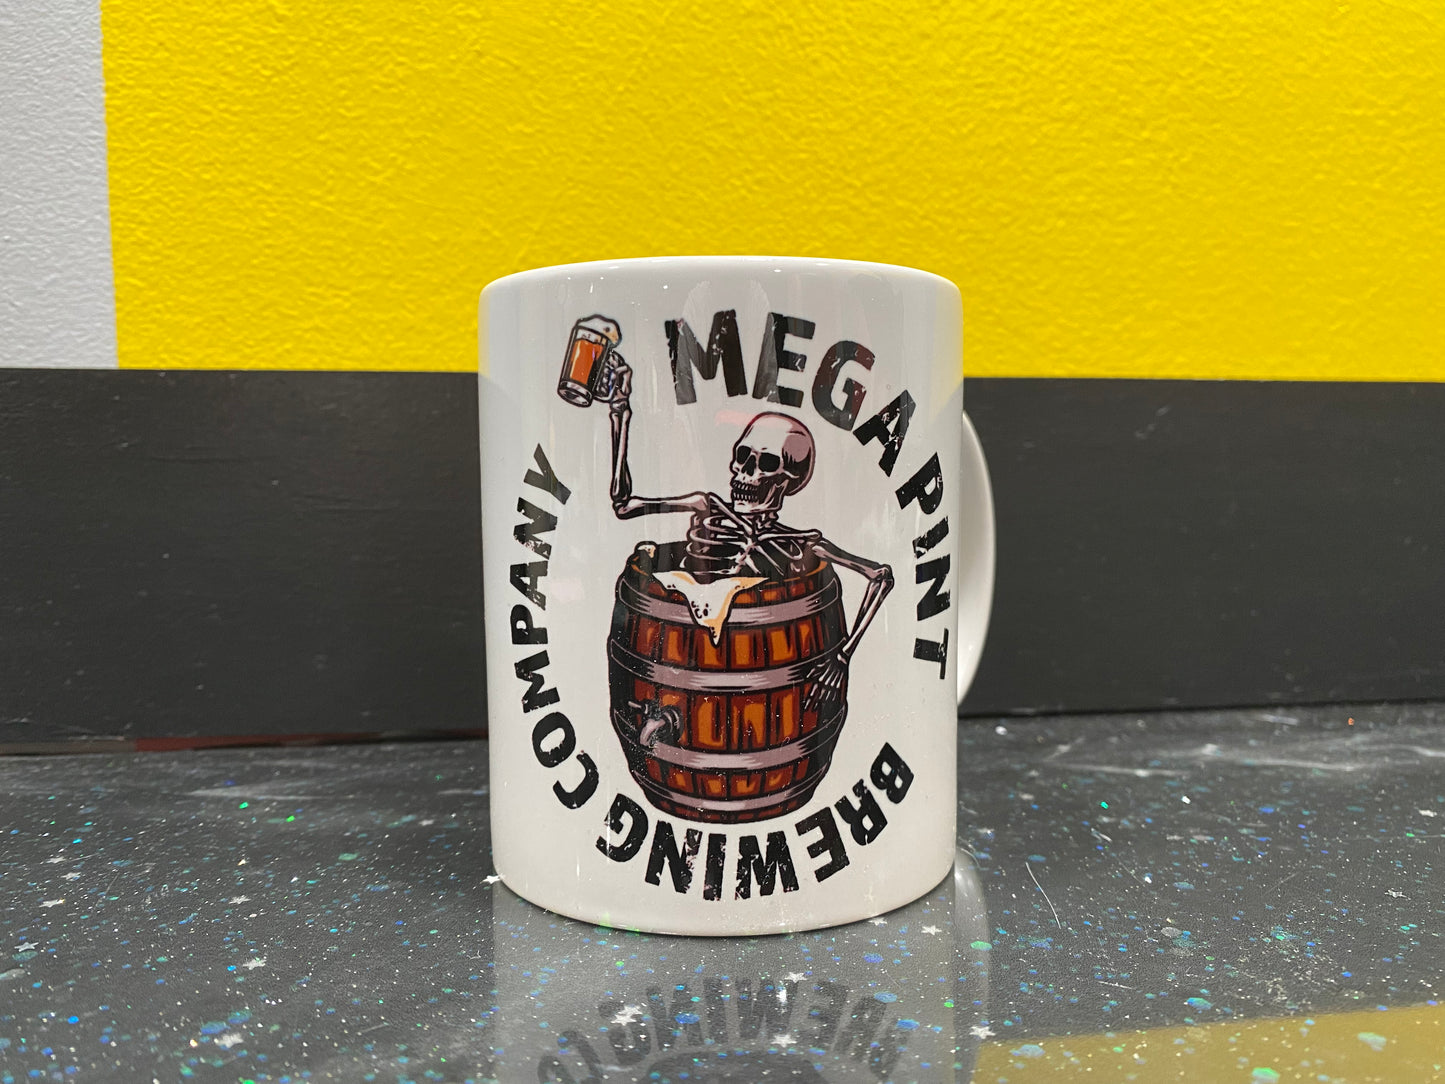 Megapint Brewing Company Coffee Mug